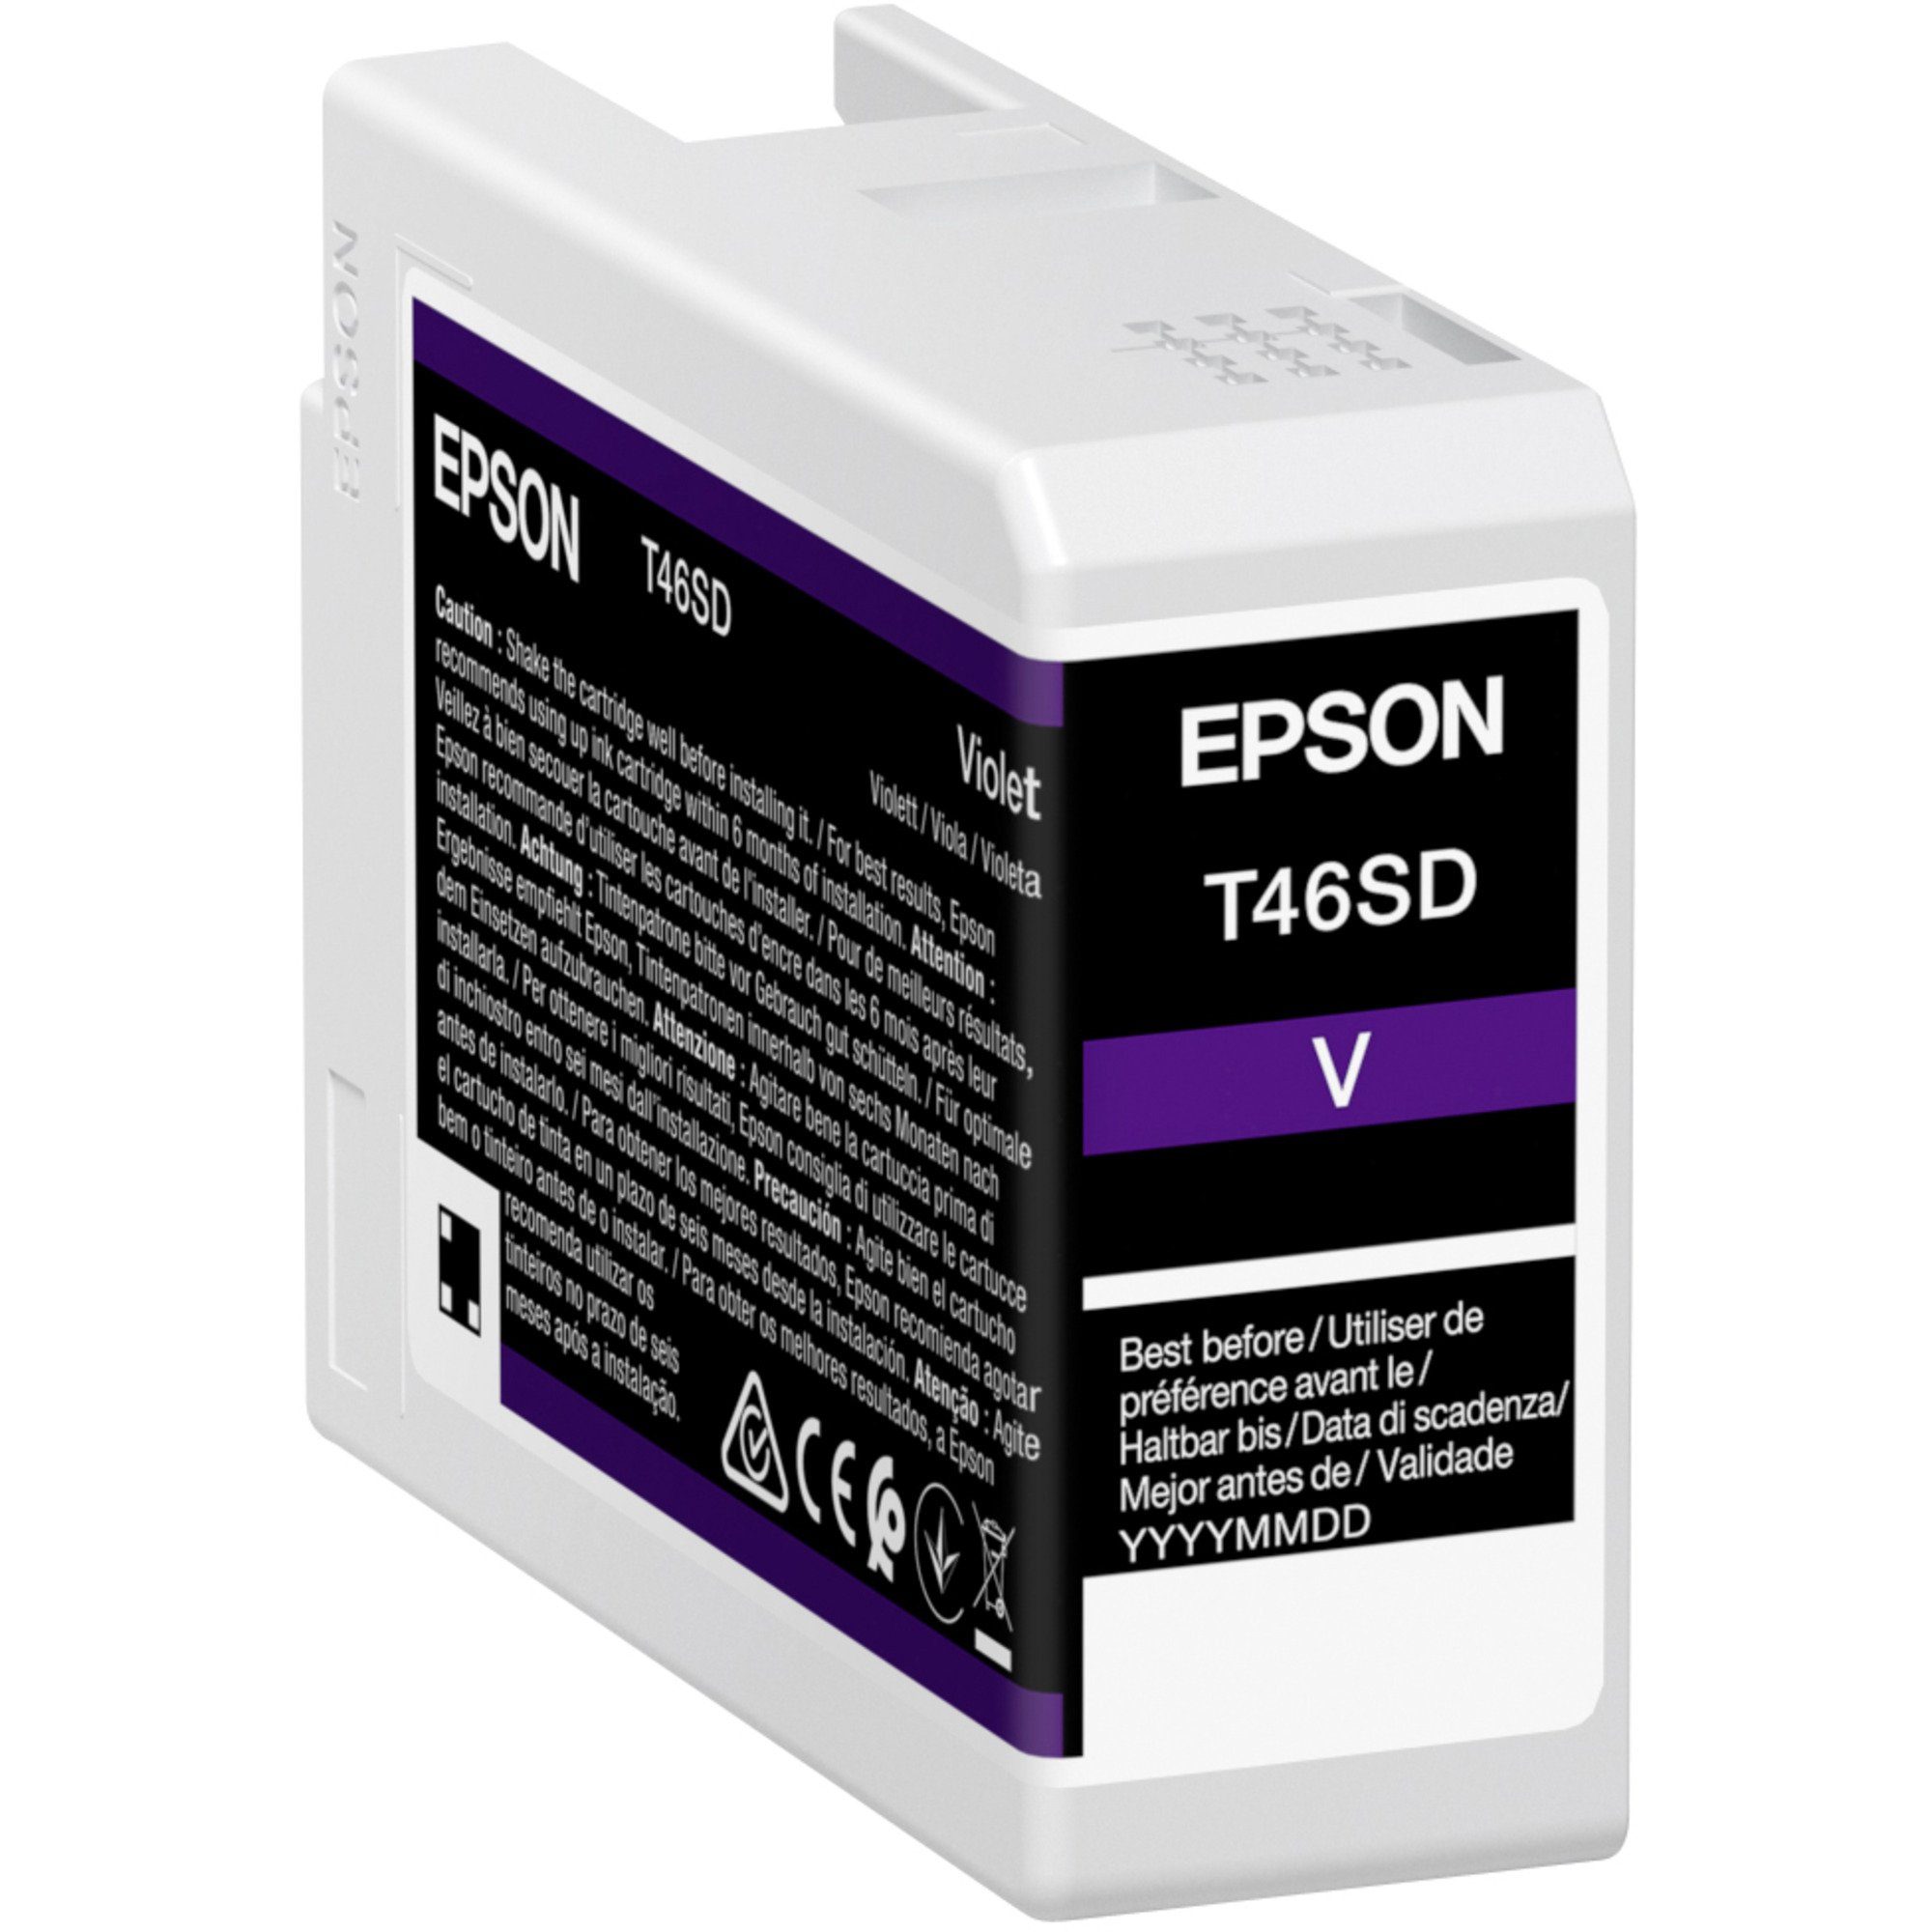 Epson Epson Tinte violett T46SD (C13T46SD00), Tintenpatrone